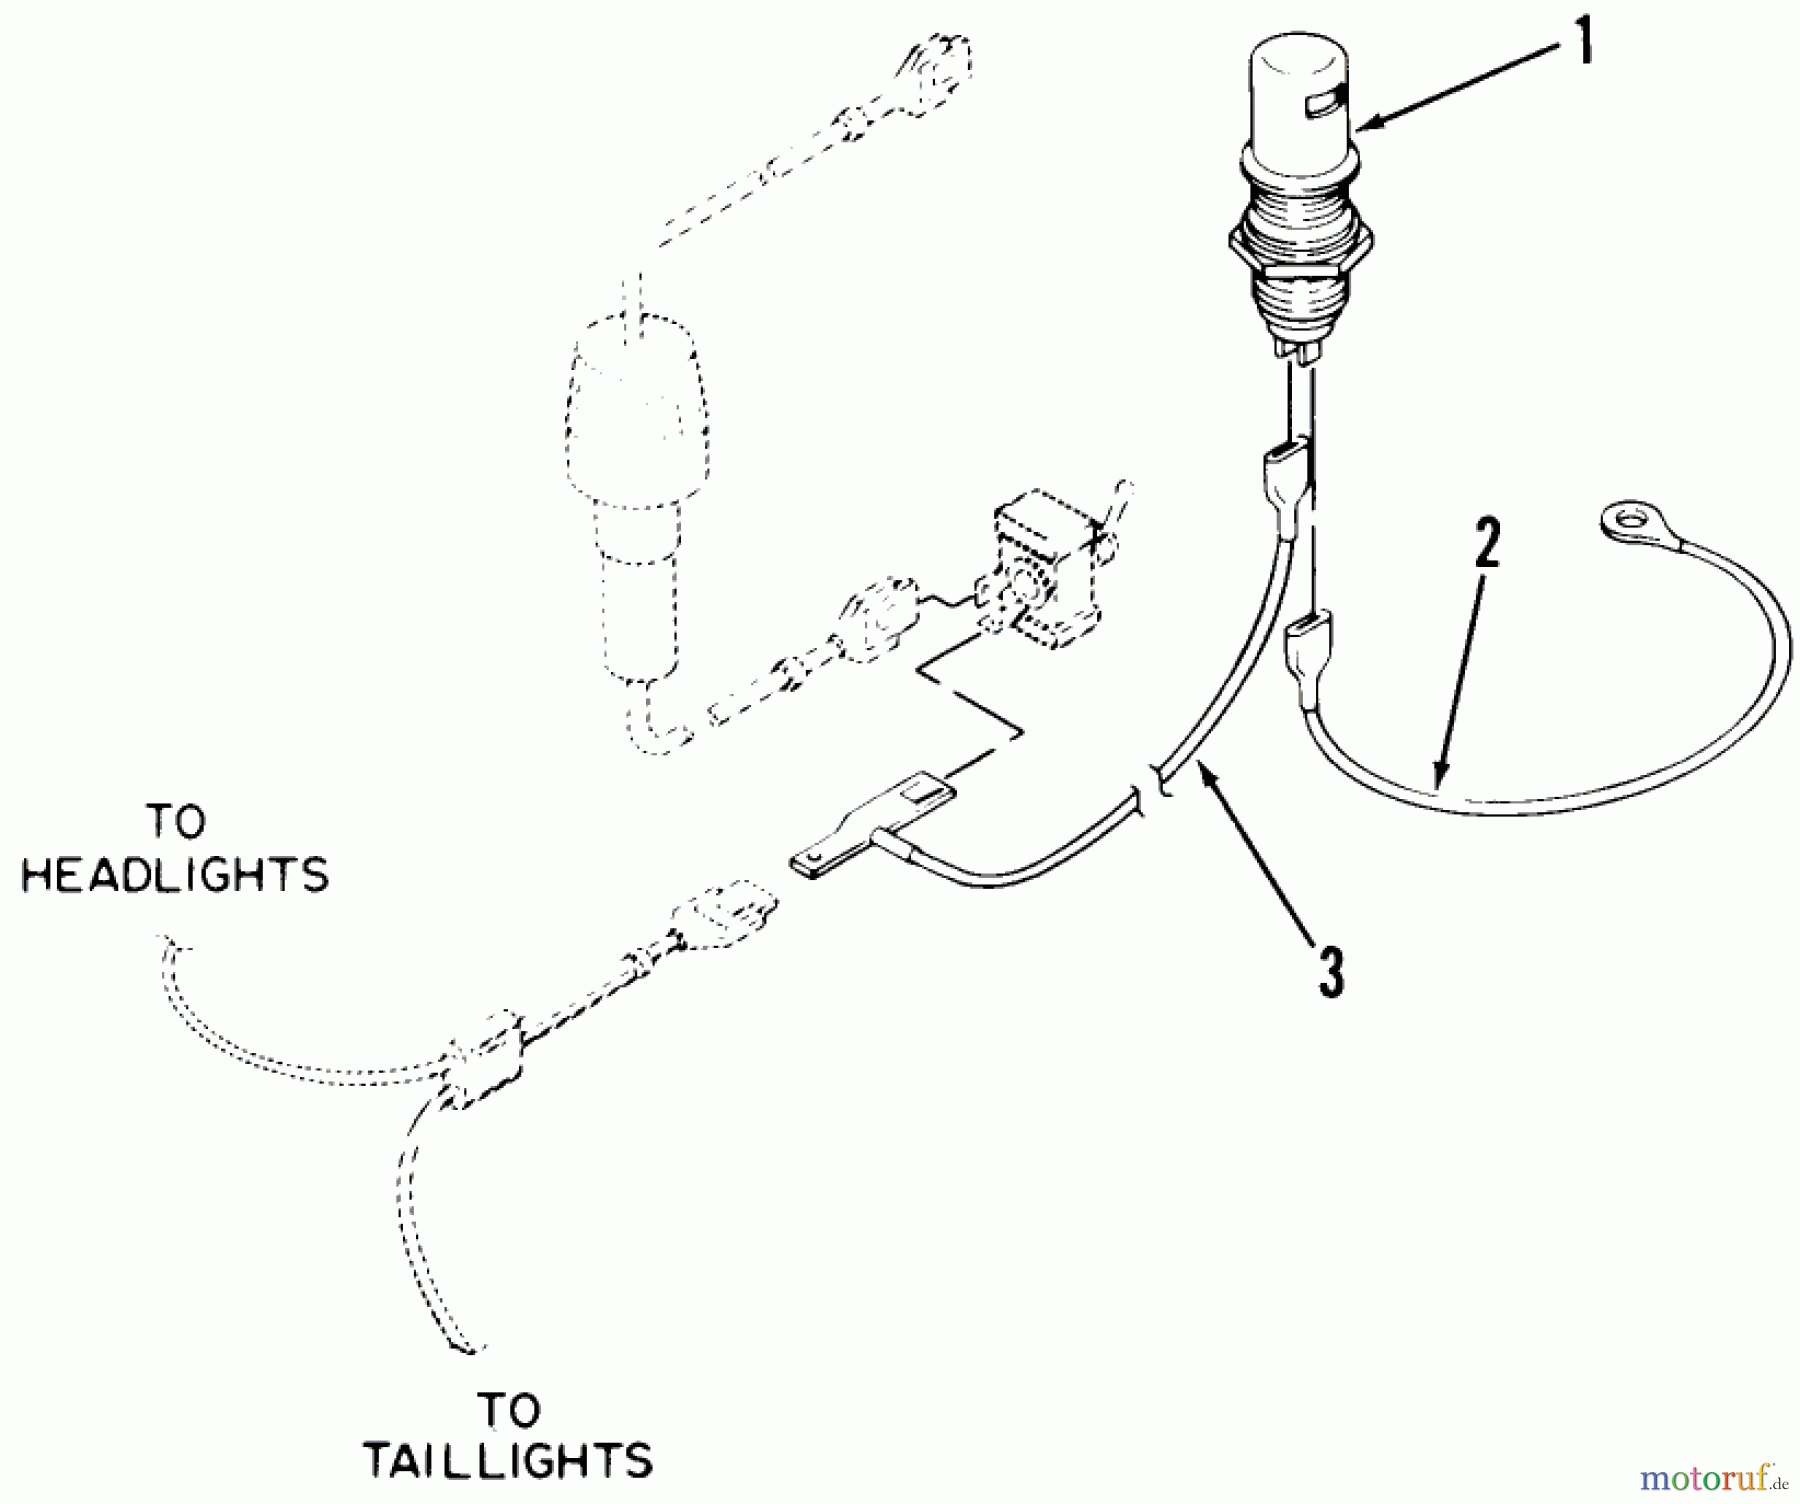  Toro Neu Accessories, Mower 80825 - Toro Dash Light, 1979 PARTS LIST FOR INSTRUMENT LIGHT FACTORY ORDER NUMBER 8-0825